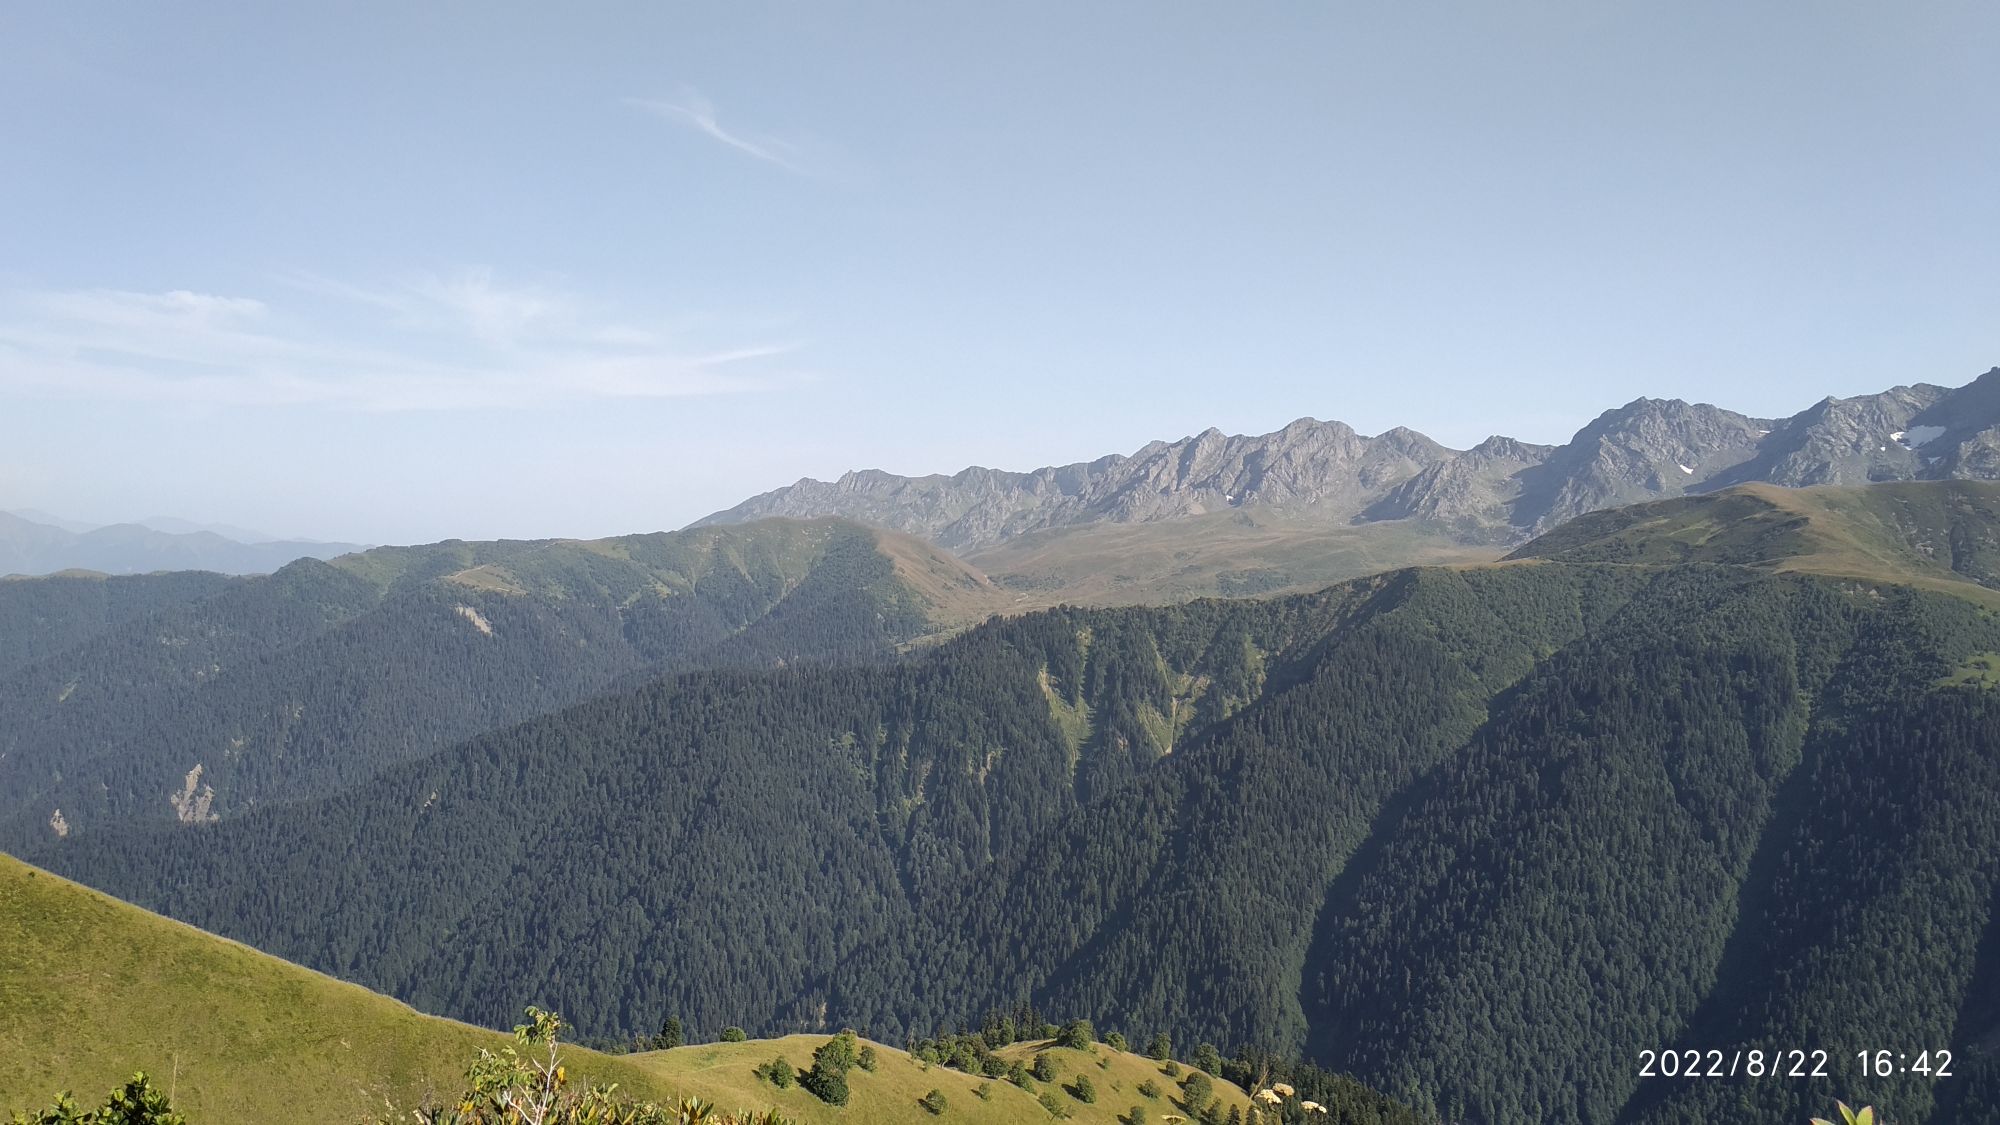 Egrisi range. Opposite range south of Devashi valley